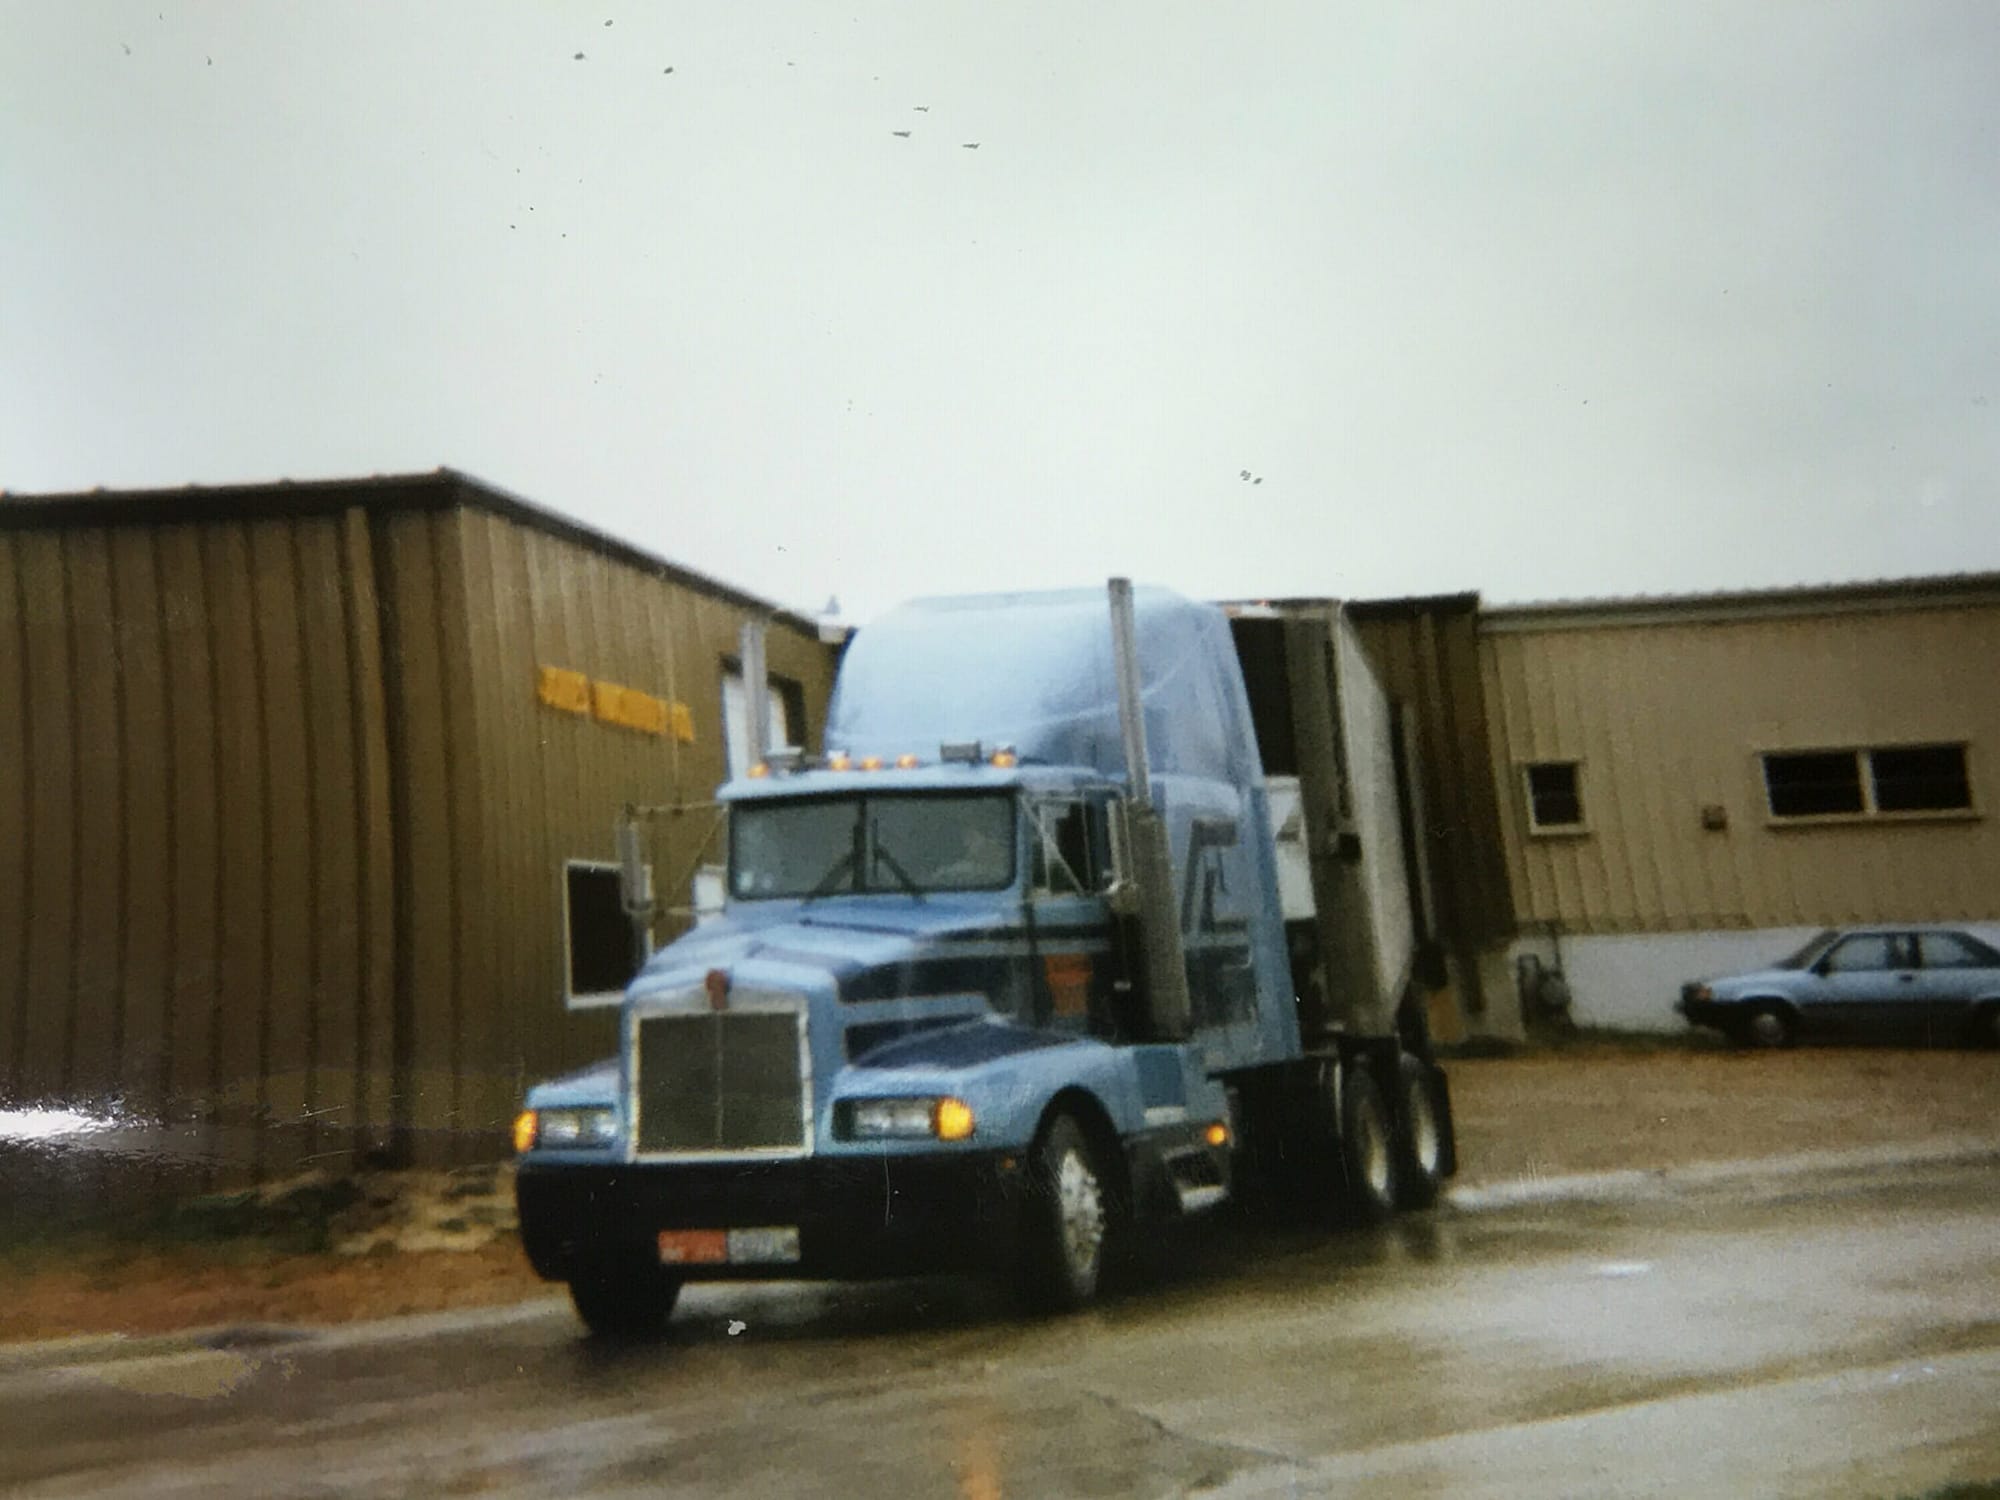 First Semi-load of Original Saw Company arrives in Britt, Iowa.